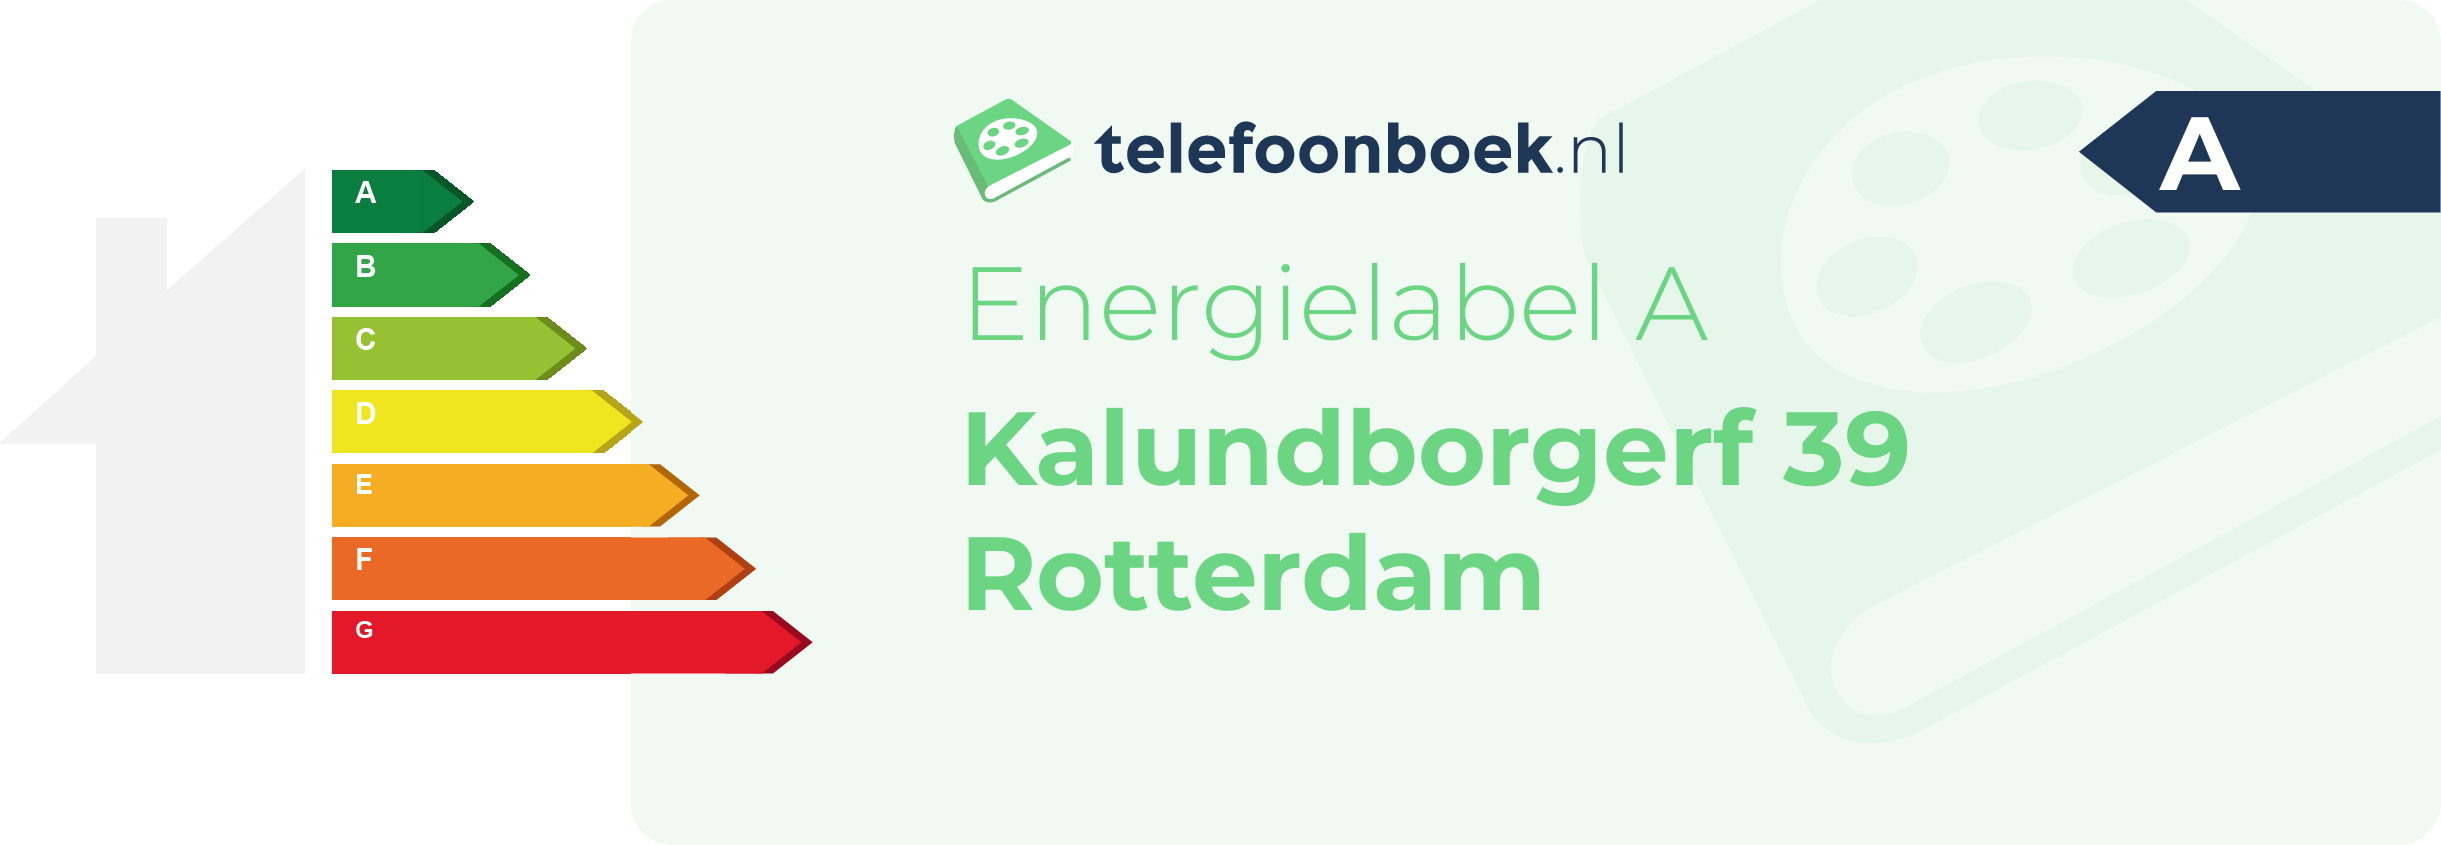 Energielabel Kalundborgerf 39 Rotterdam